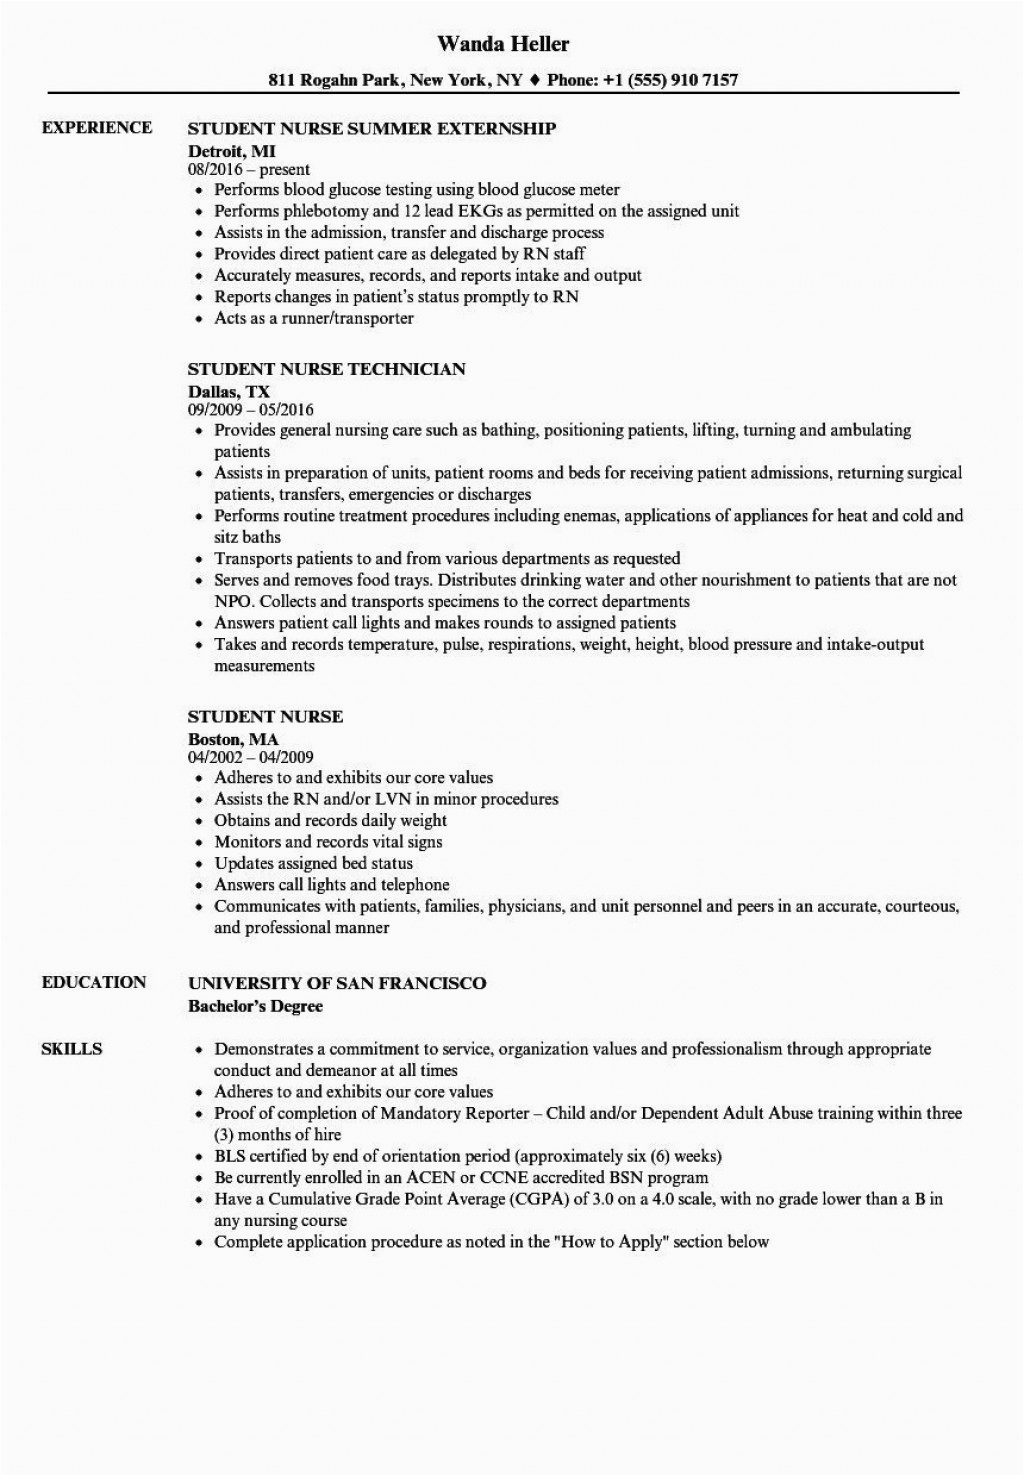 Sample Resume for School Nurse Position Nursing Student Resume Template Addictionary